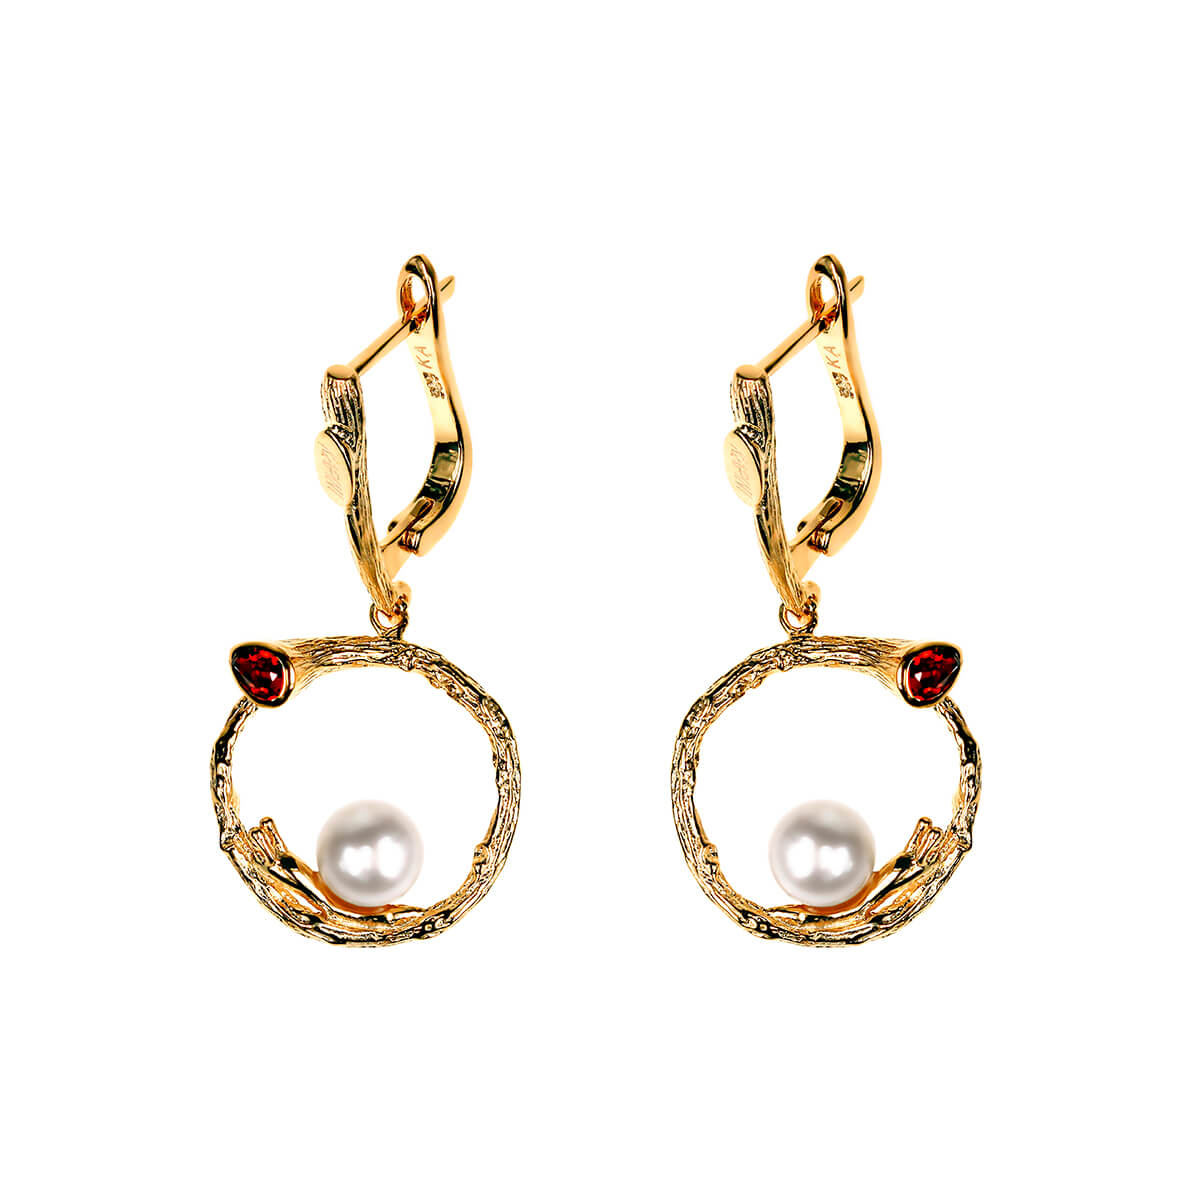 Gamya earrings